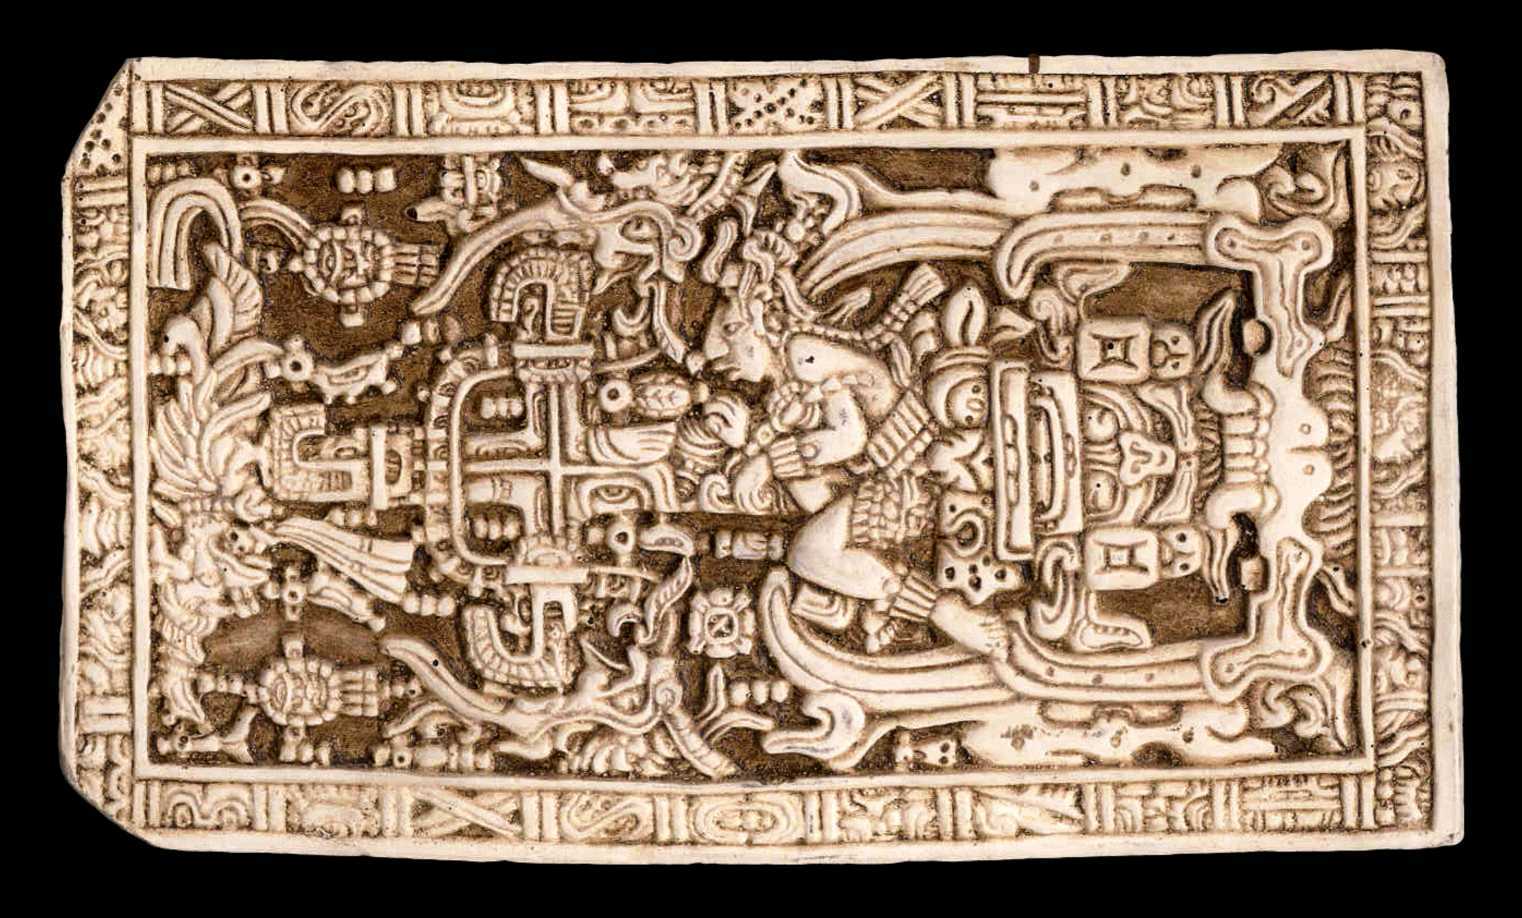 Mayalar eski astronotlar tarafından ziyaret edildi mi? 4